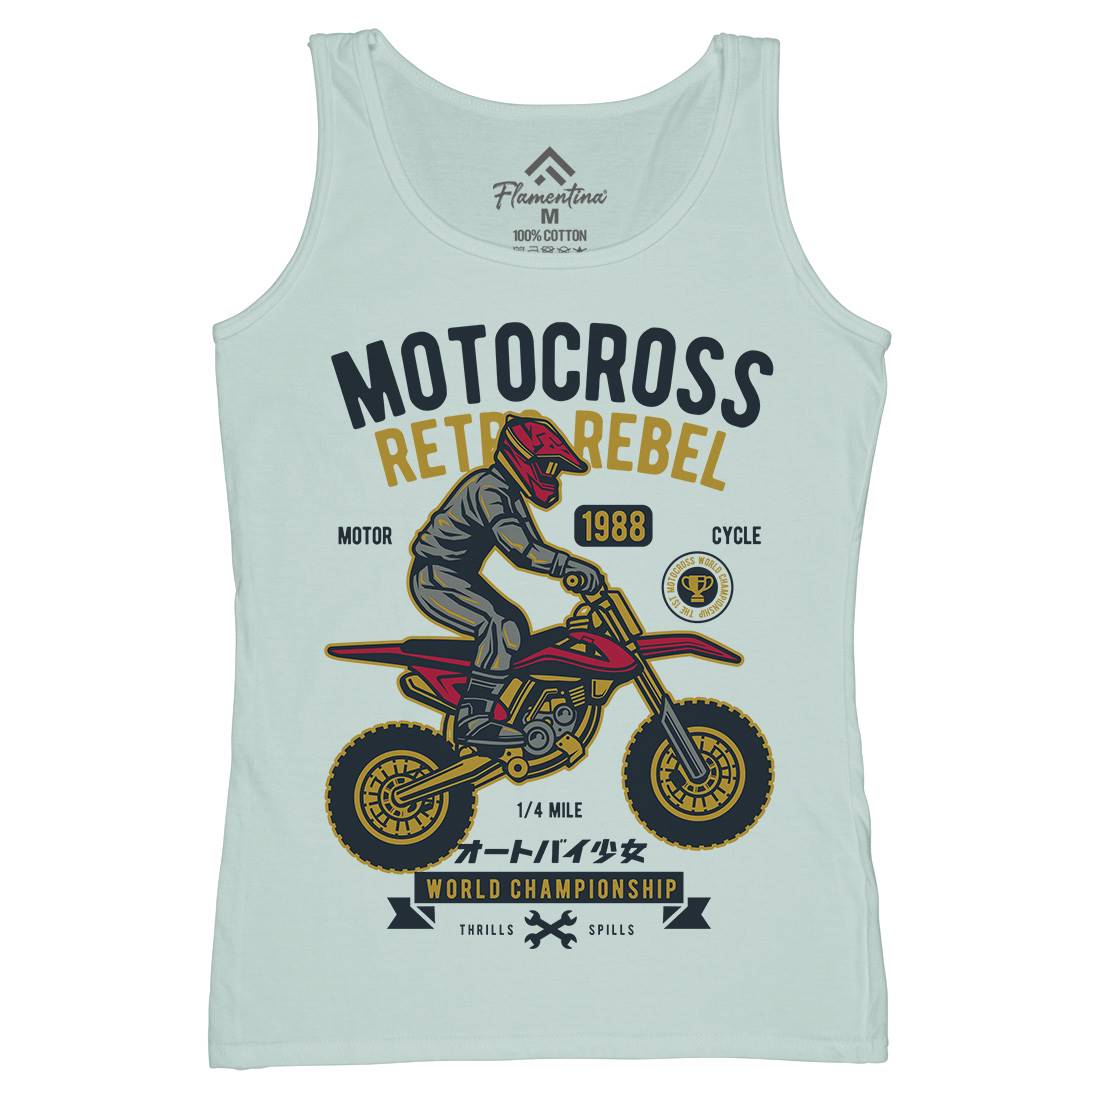 Motocross Retro Rebel Womens Organic Tank Top Vest Motorcycles D553